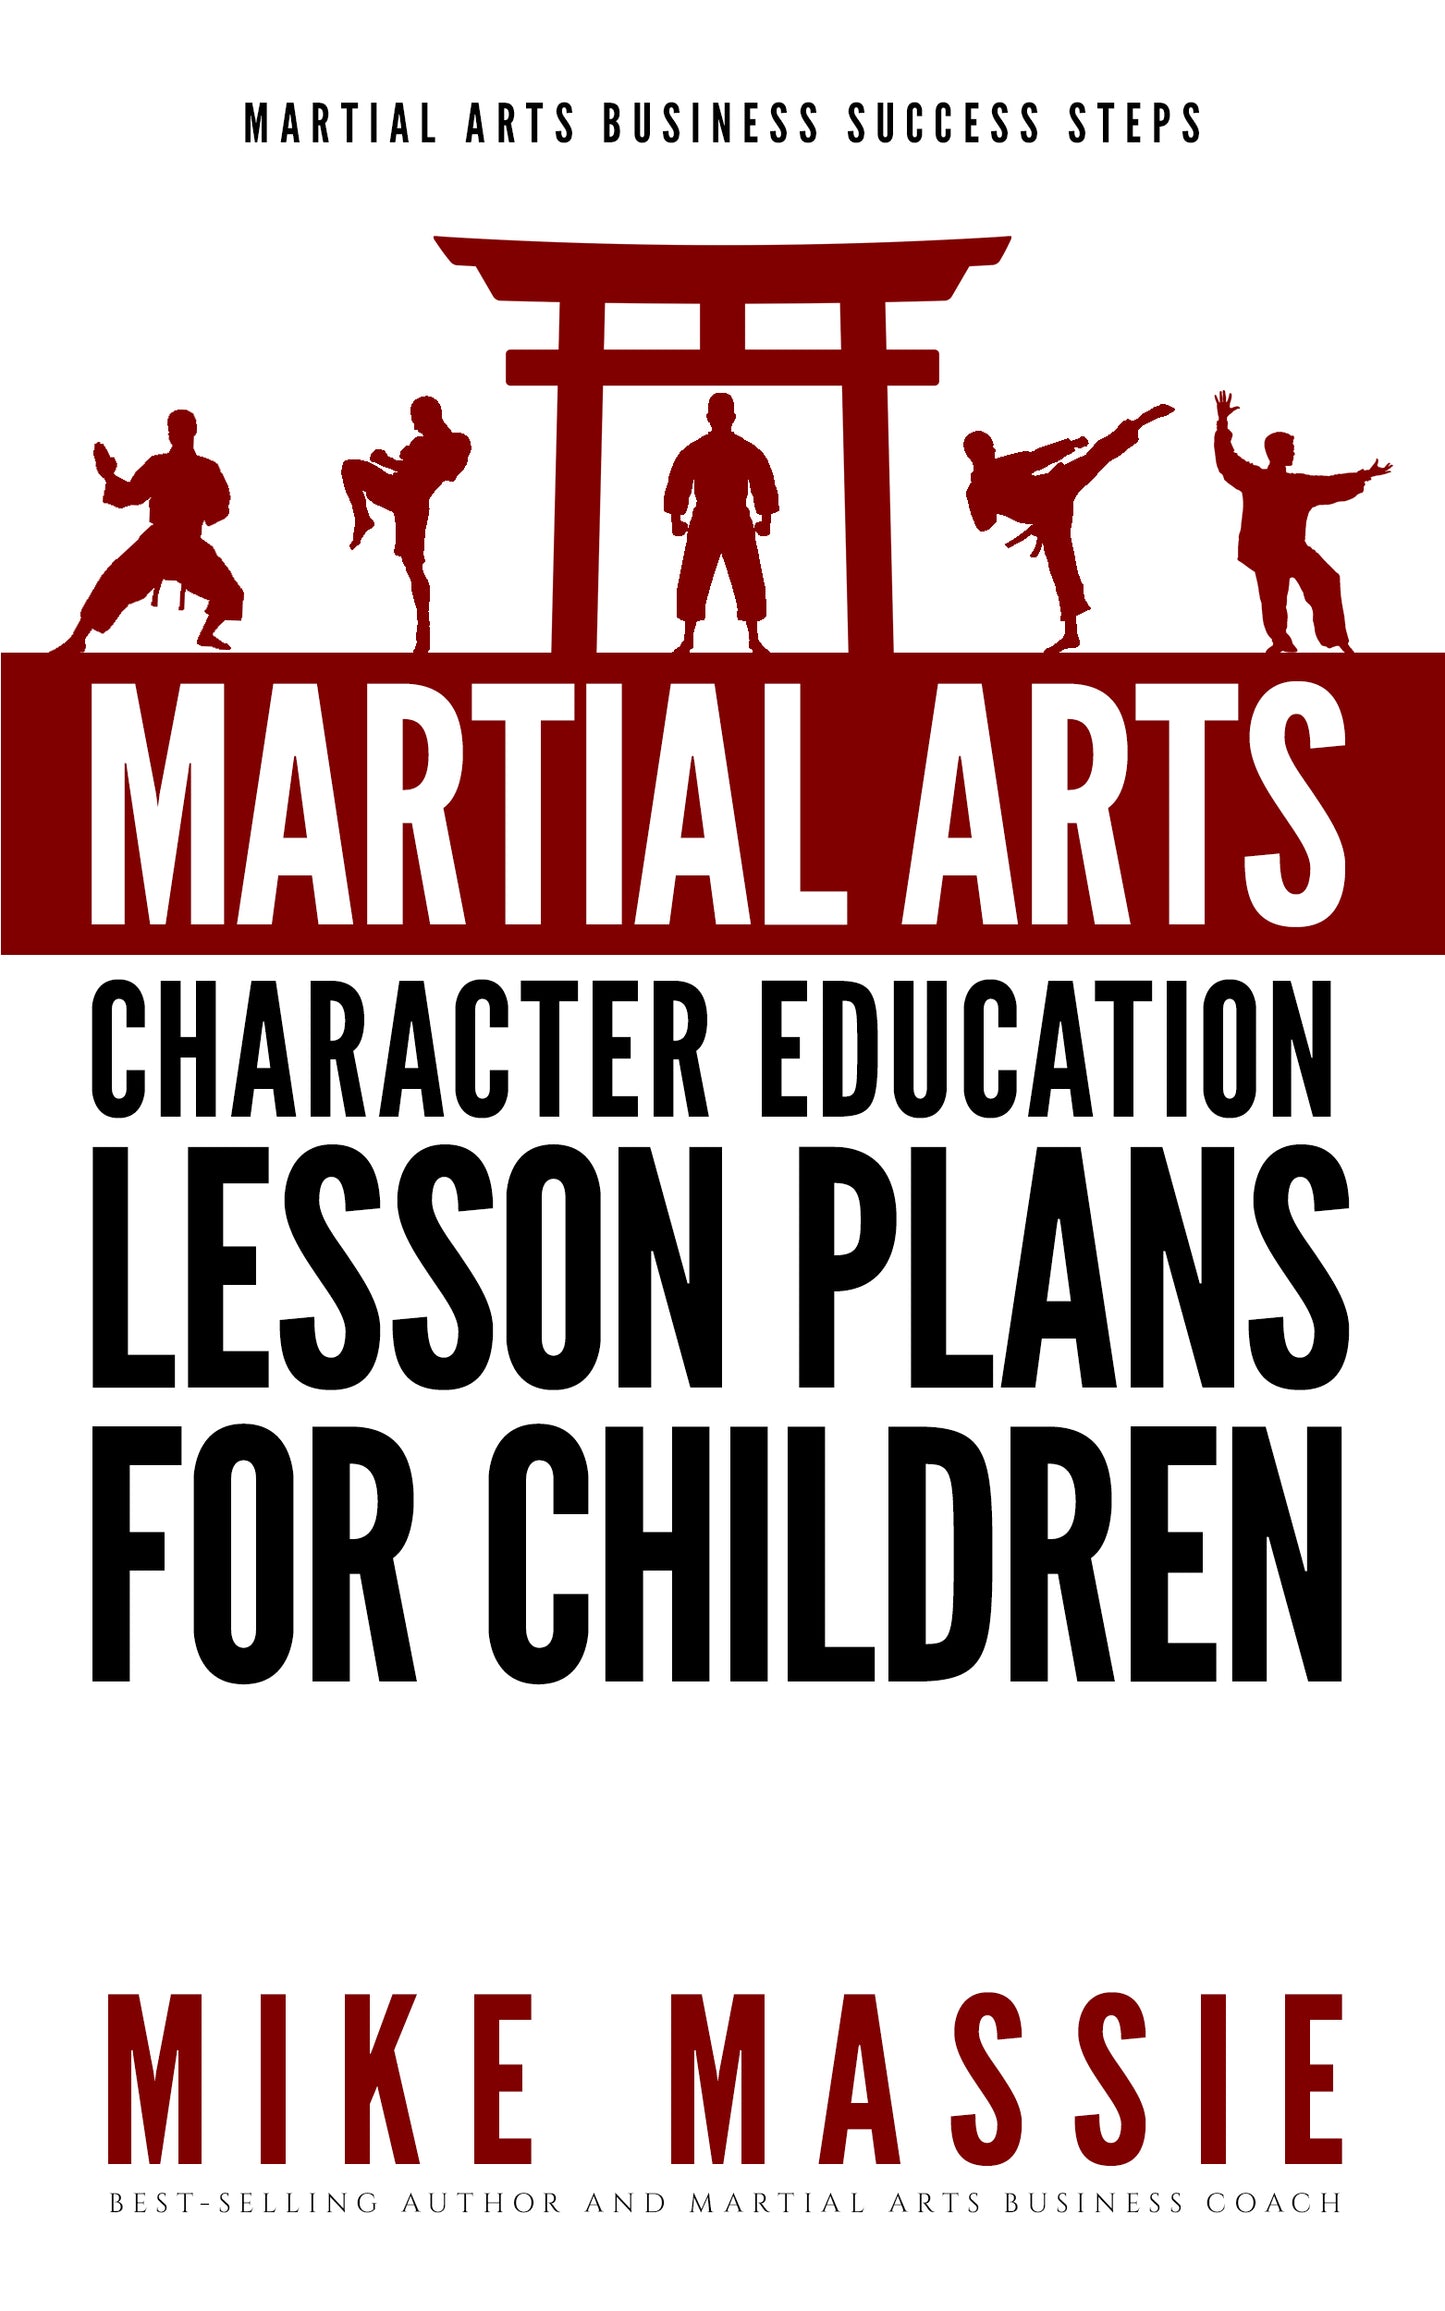 Martial Arts Character Education Lesson Plans for Children (Kindle & ePub)